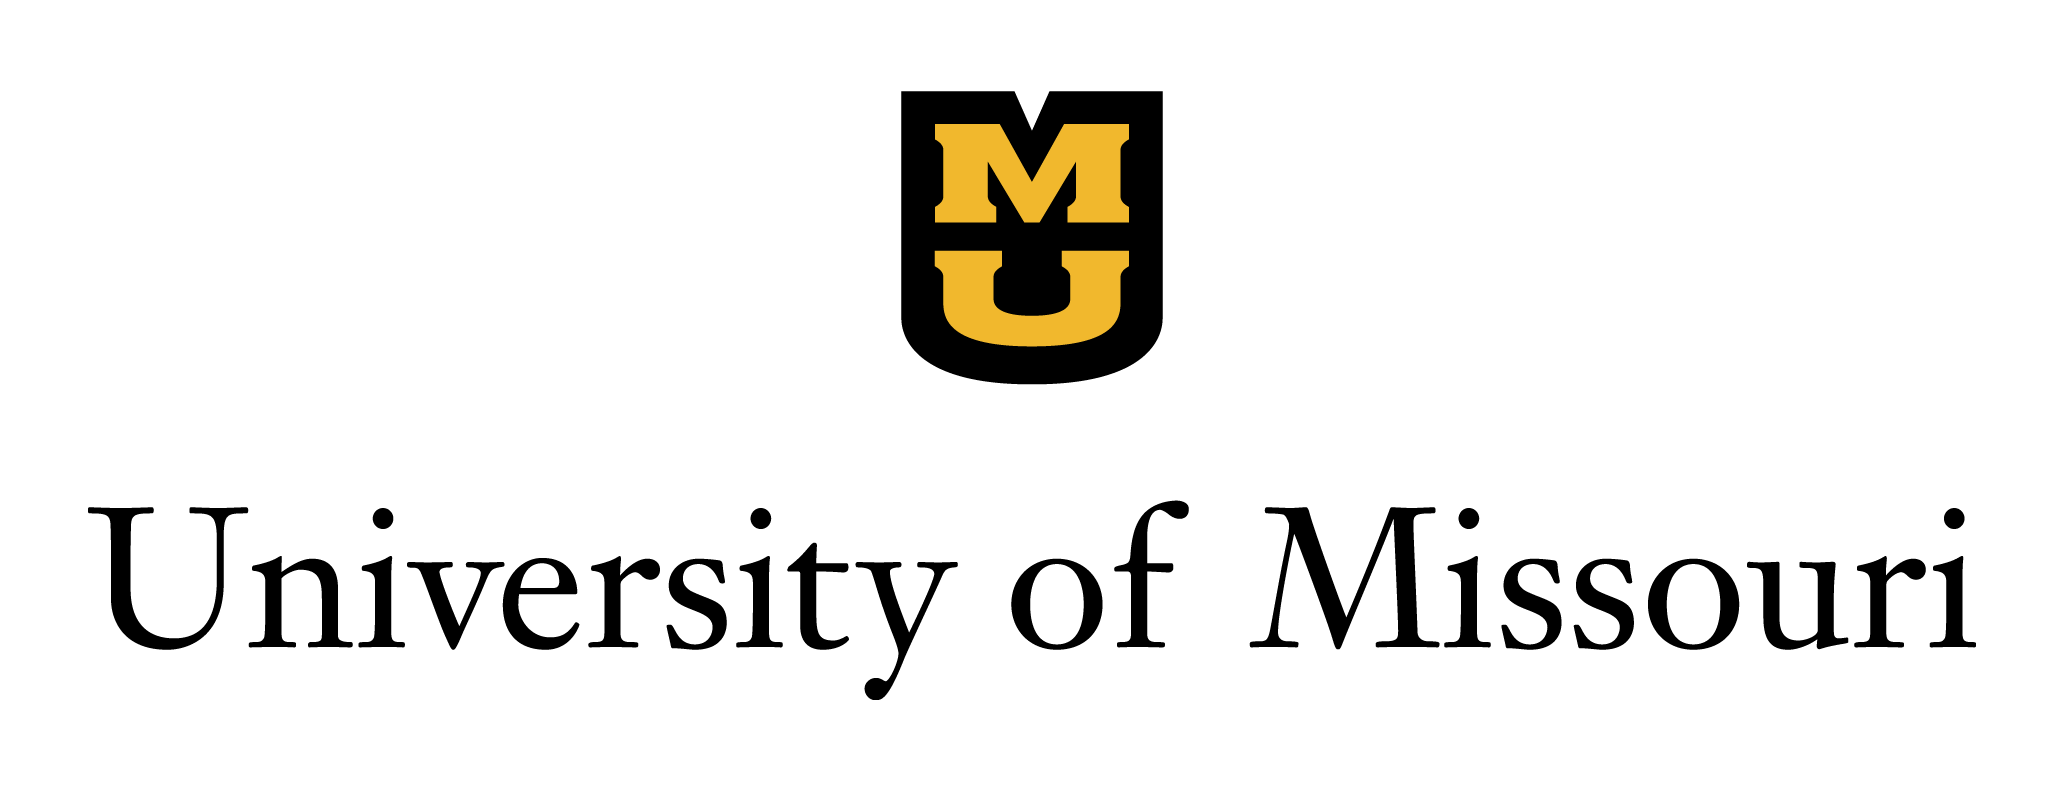 Mizzou Logo - MU Licensing | University of Missouri Licensing and Trademarks